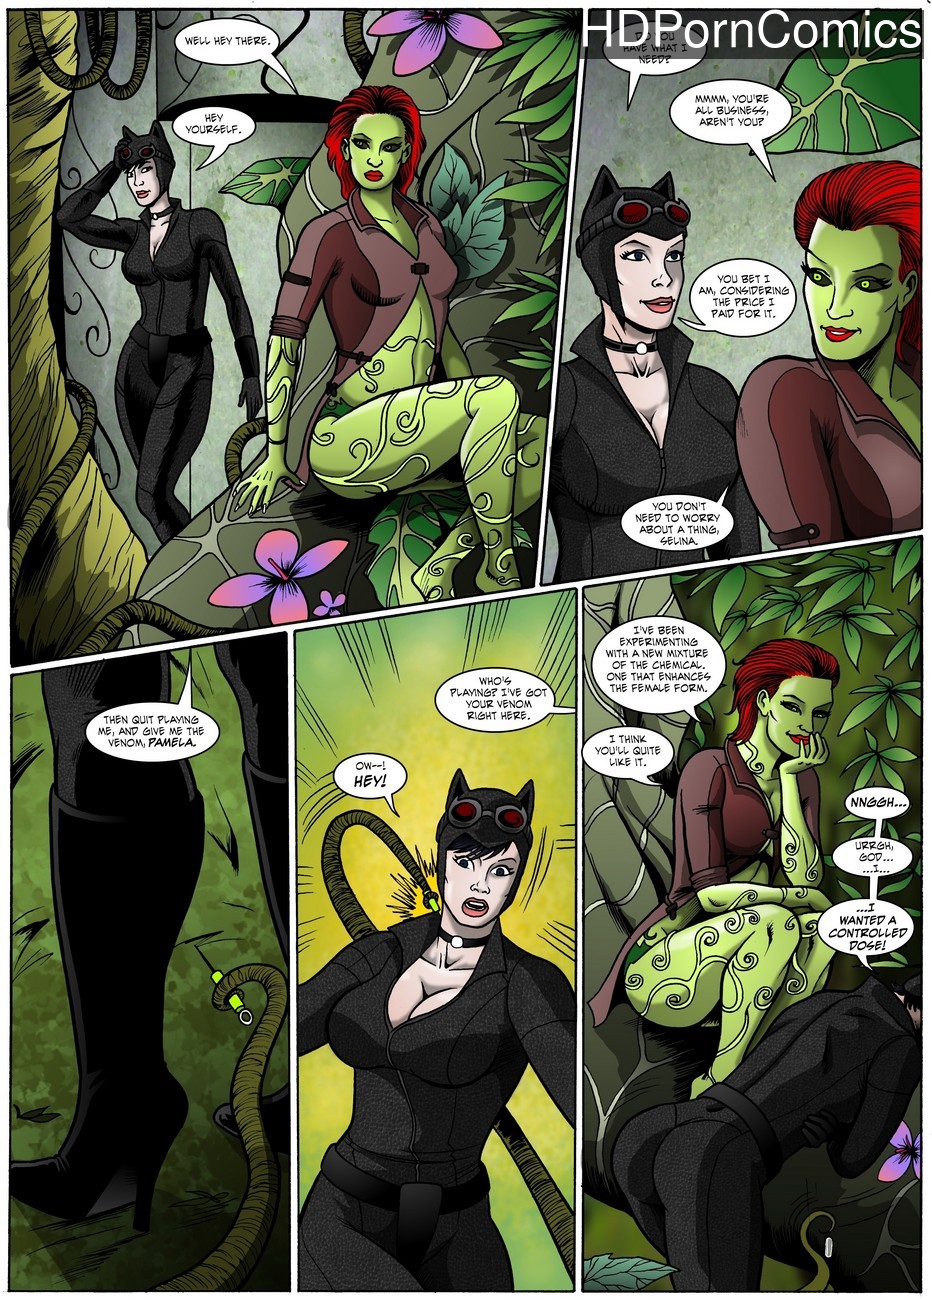 Cartoon Catwoman Shemale Hentai - Catwoman Muscle Growth comic porn â€“ HD Porn Comics